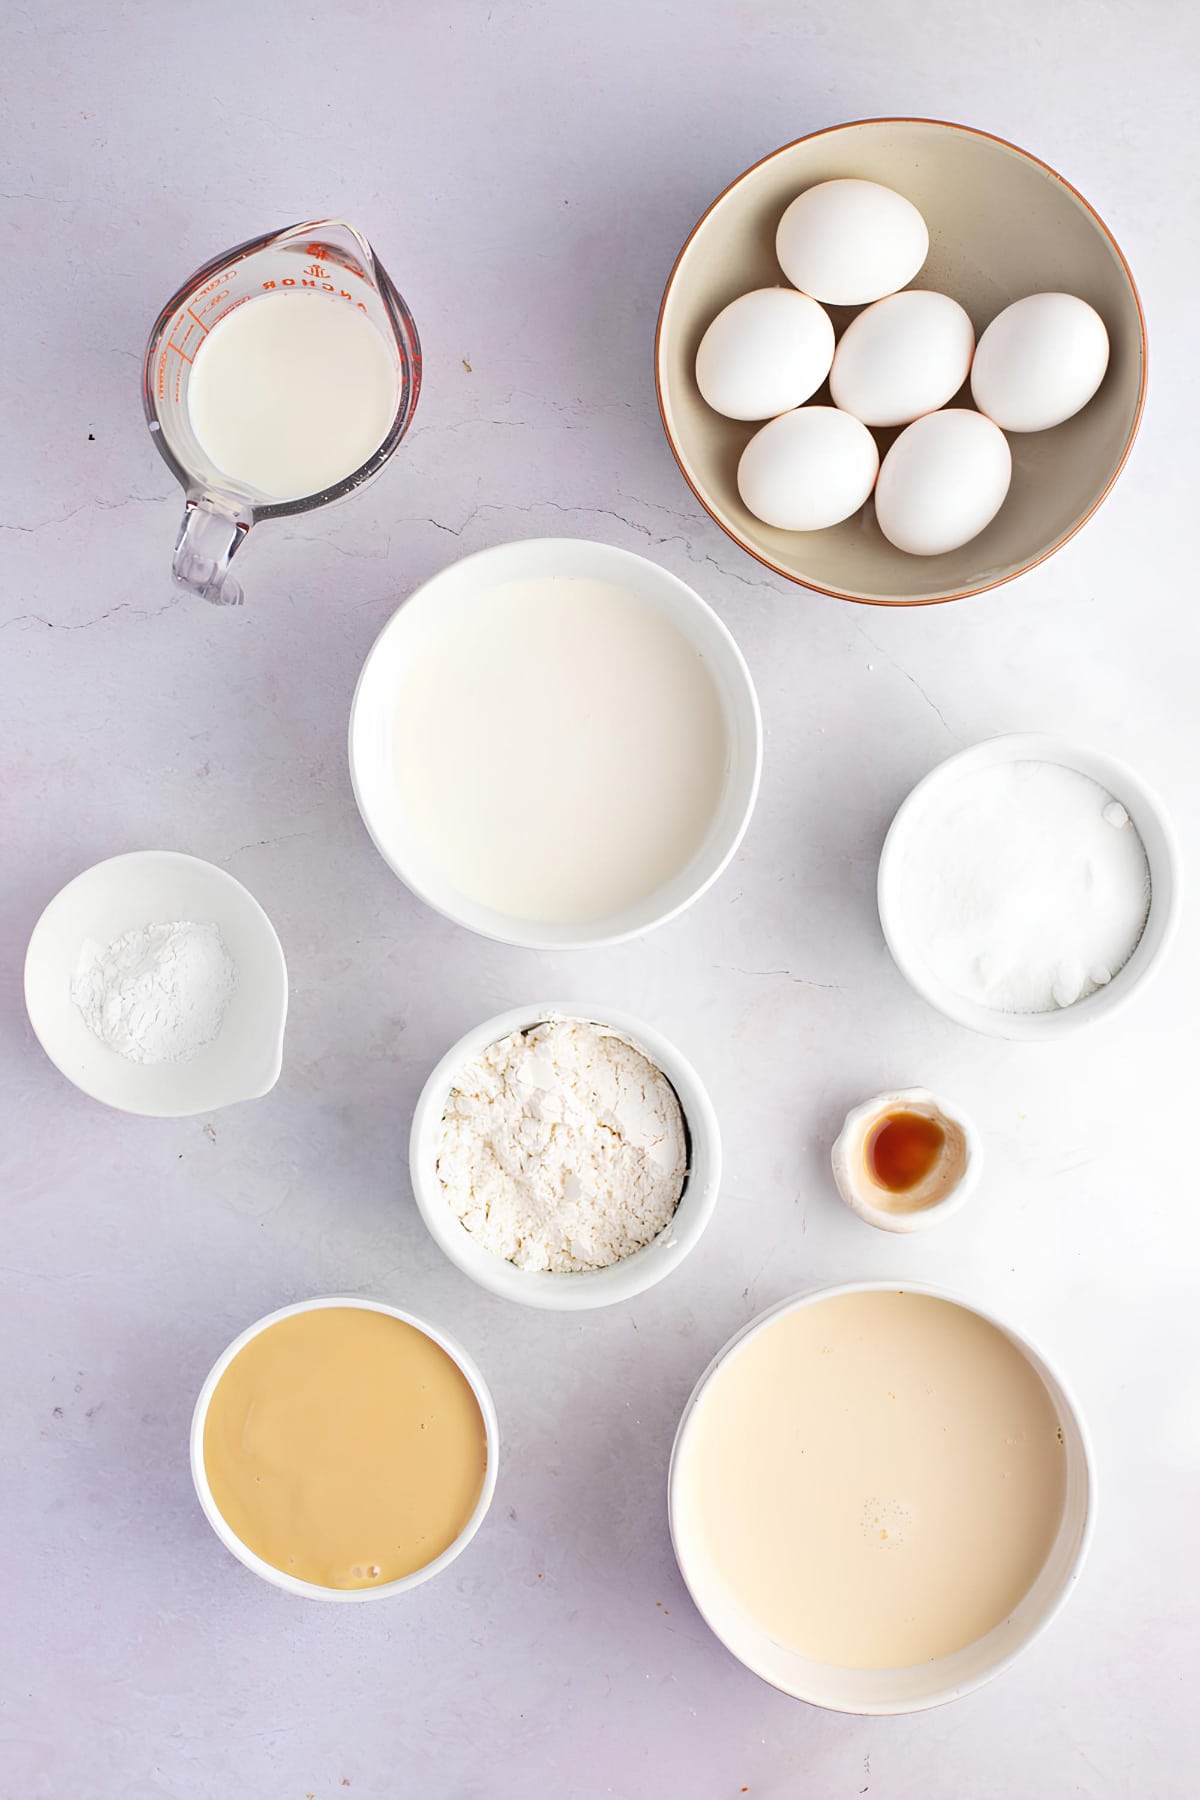 Pastel De Tres Leches Ingredients - Flour, Eggs, Sugar, Baking Powder, Milk, Vanilla Extract and Fresh Berries